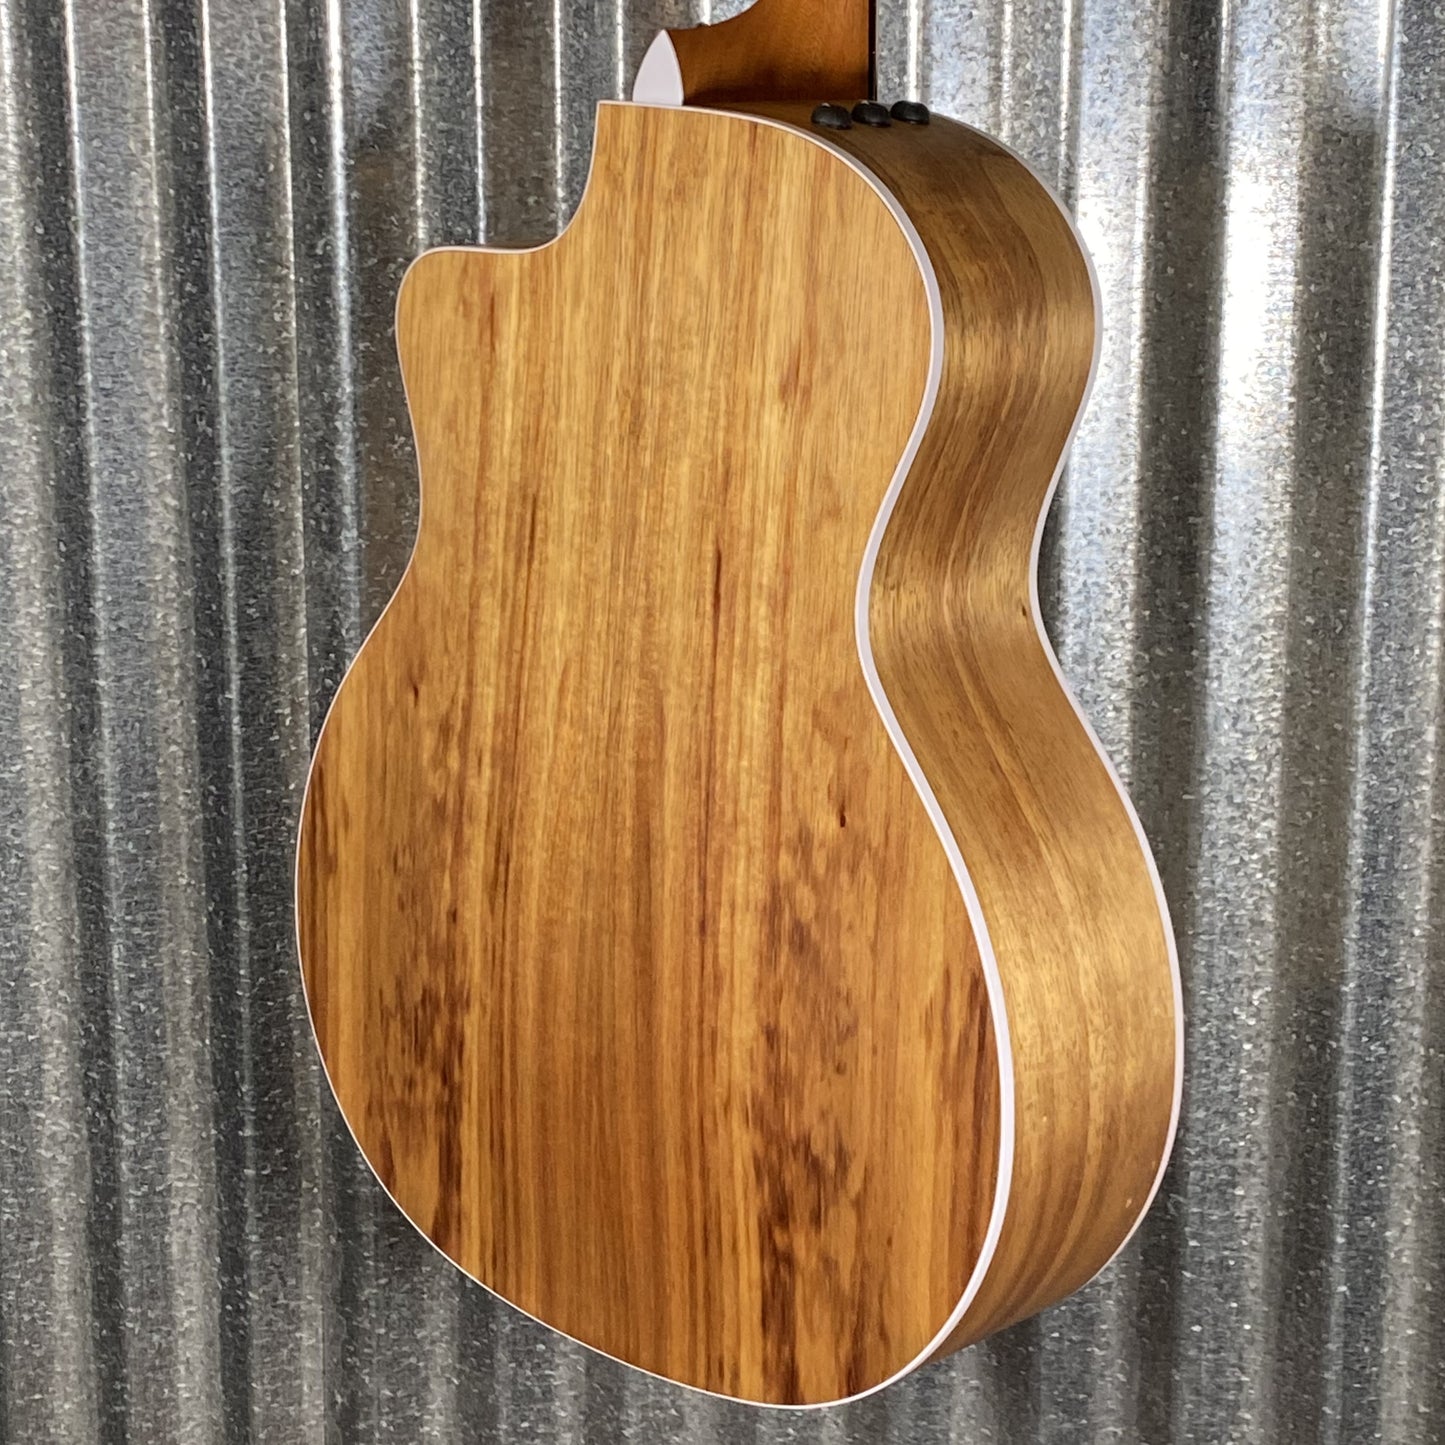 Taylor 214CE-K Acoustic Electric Spruce Koa Natural Guitar & Bag #2140 Used